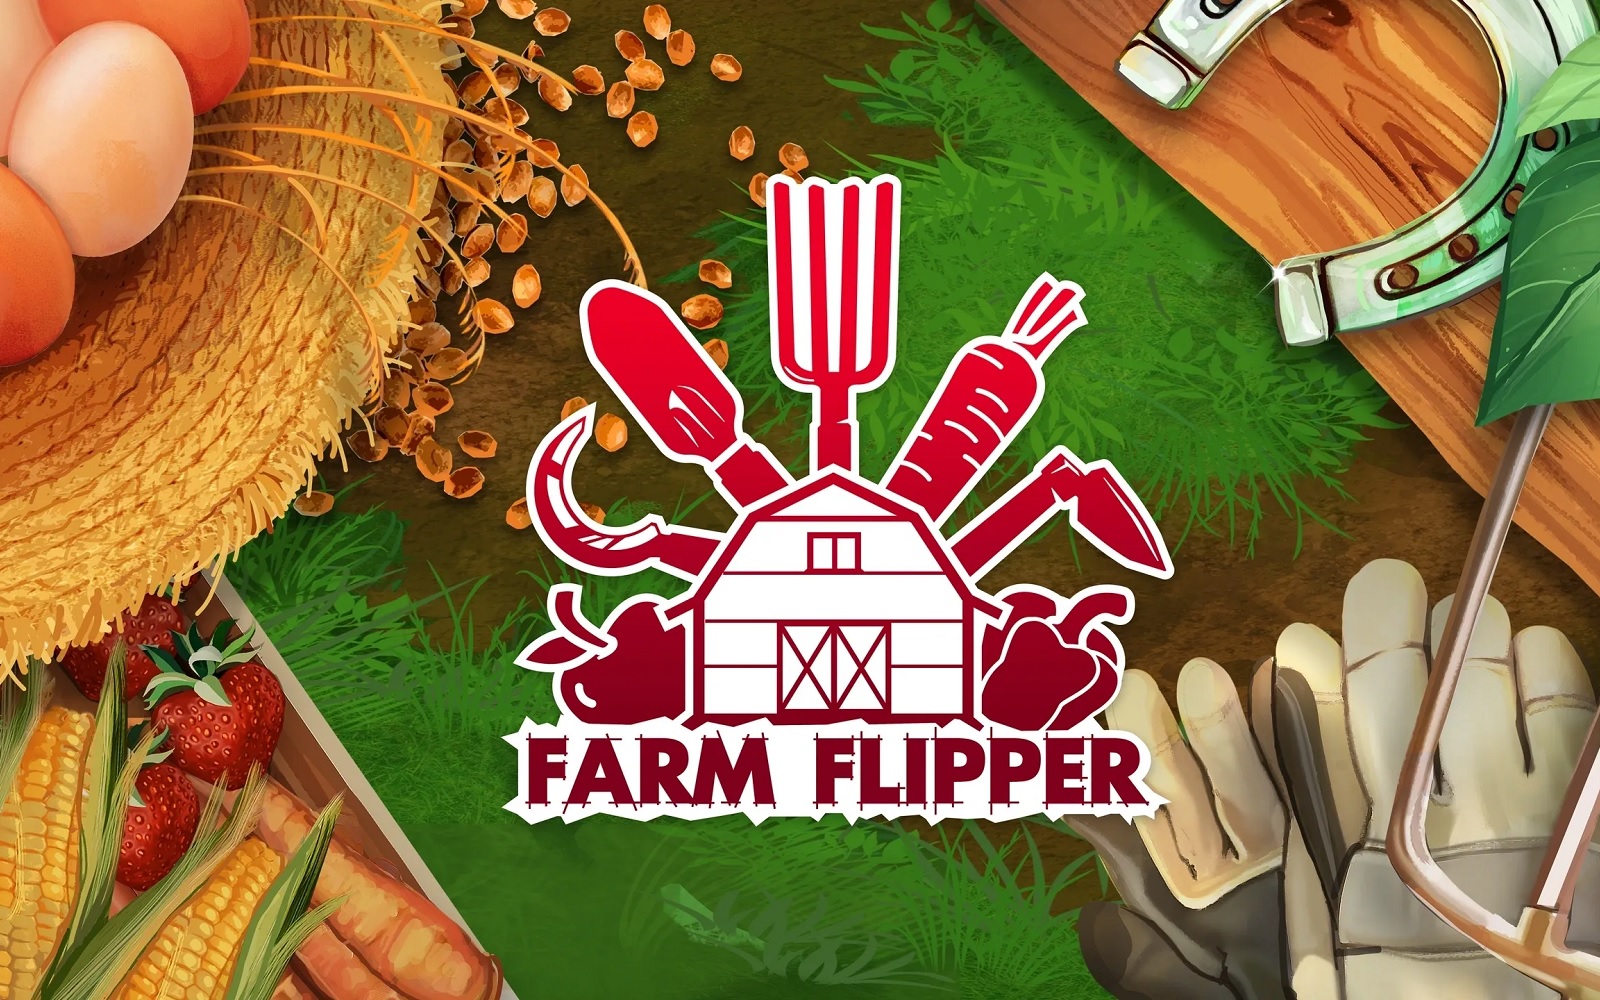 House Flipper: Farm Flipper DLC